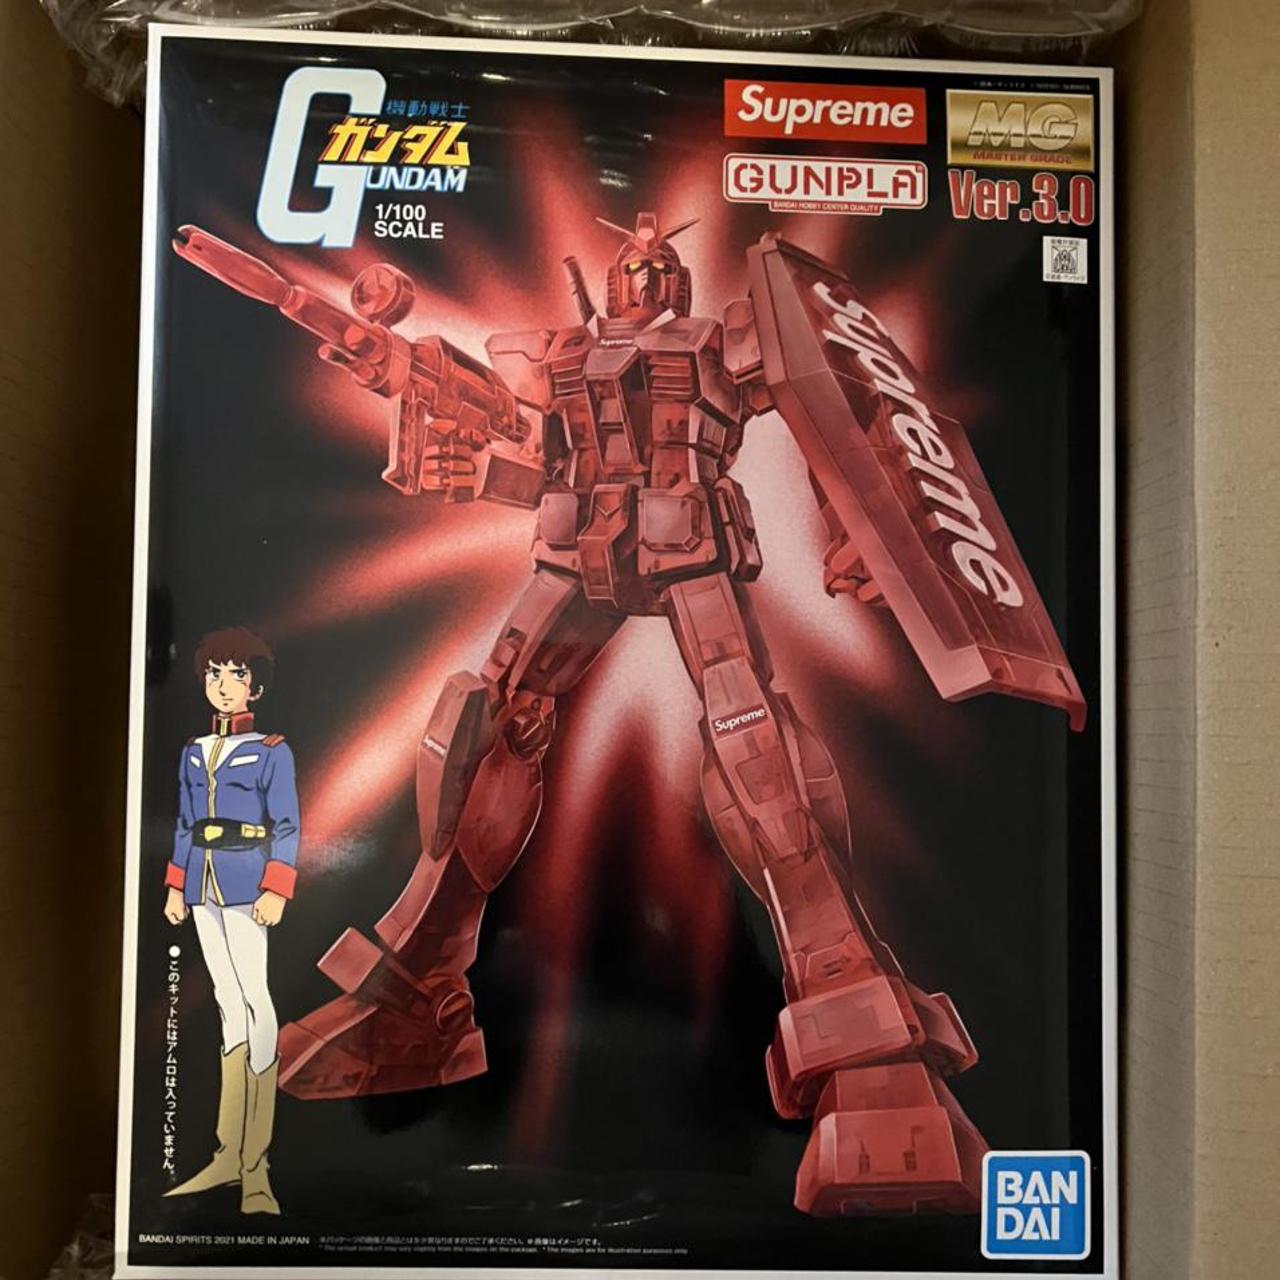 Supreme X Gundam - Depop